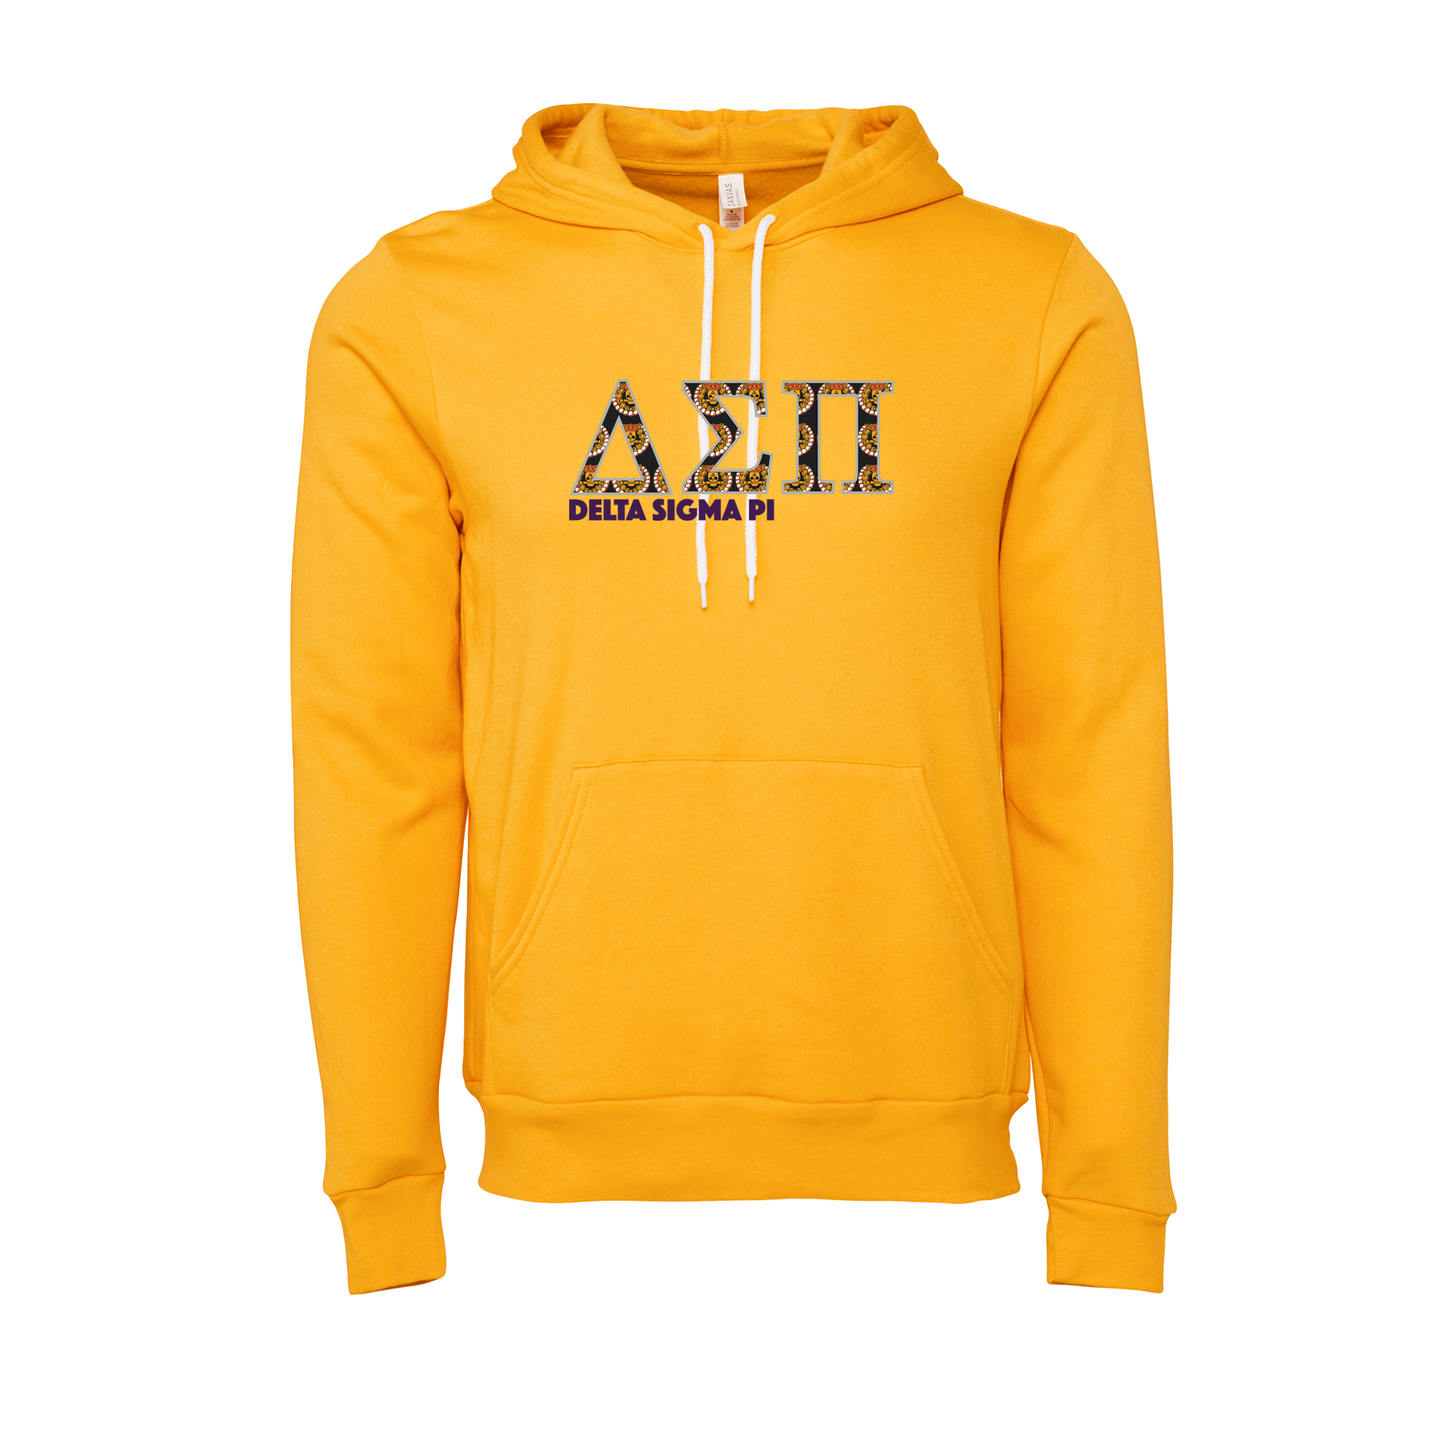 Delta Sigma Pi Applique Letters Hooded Sweatshirt